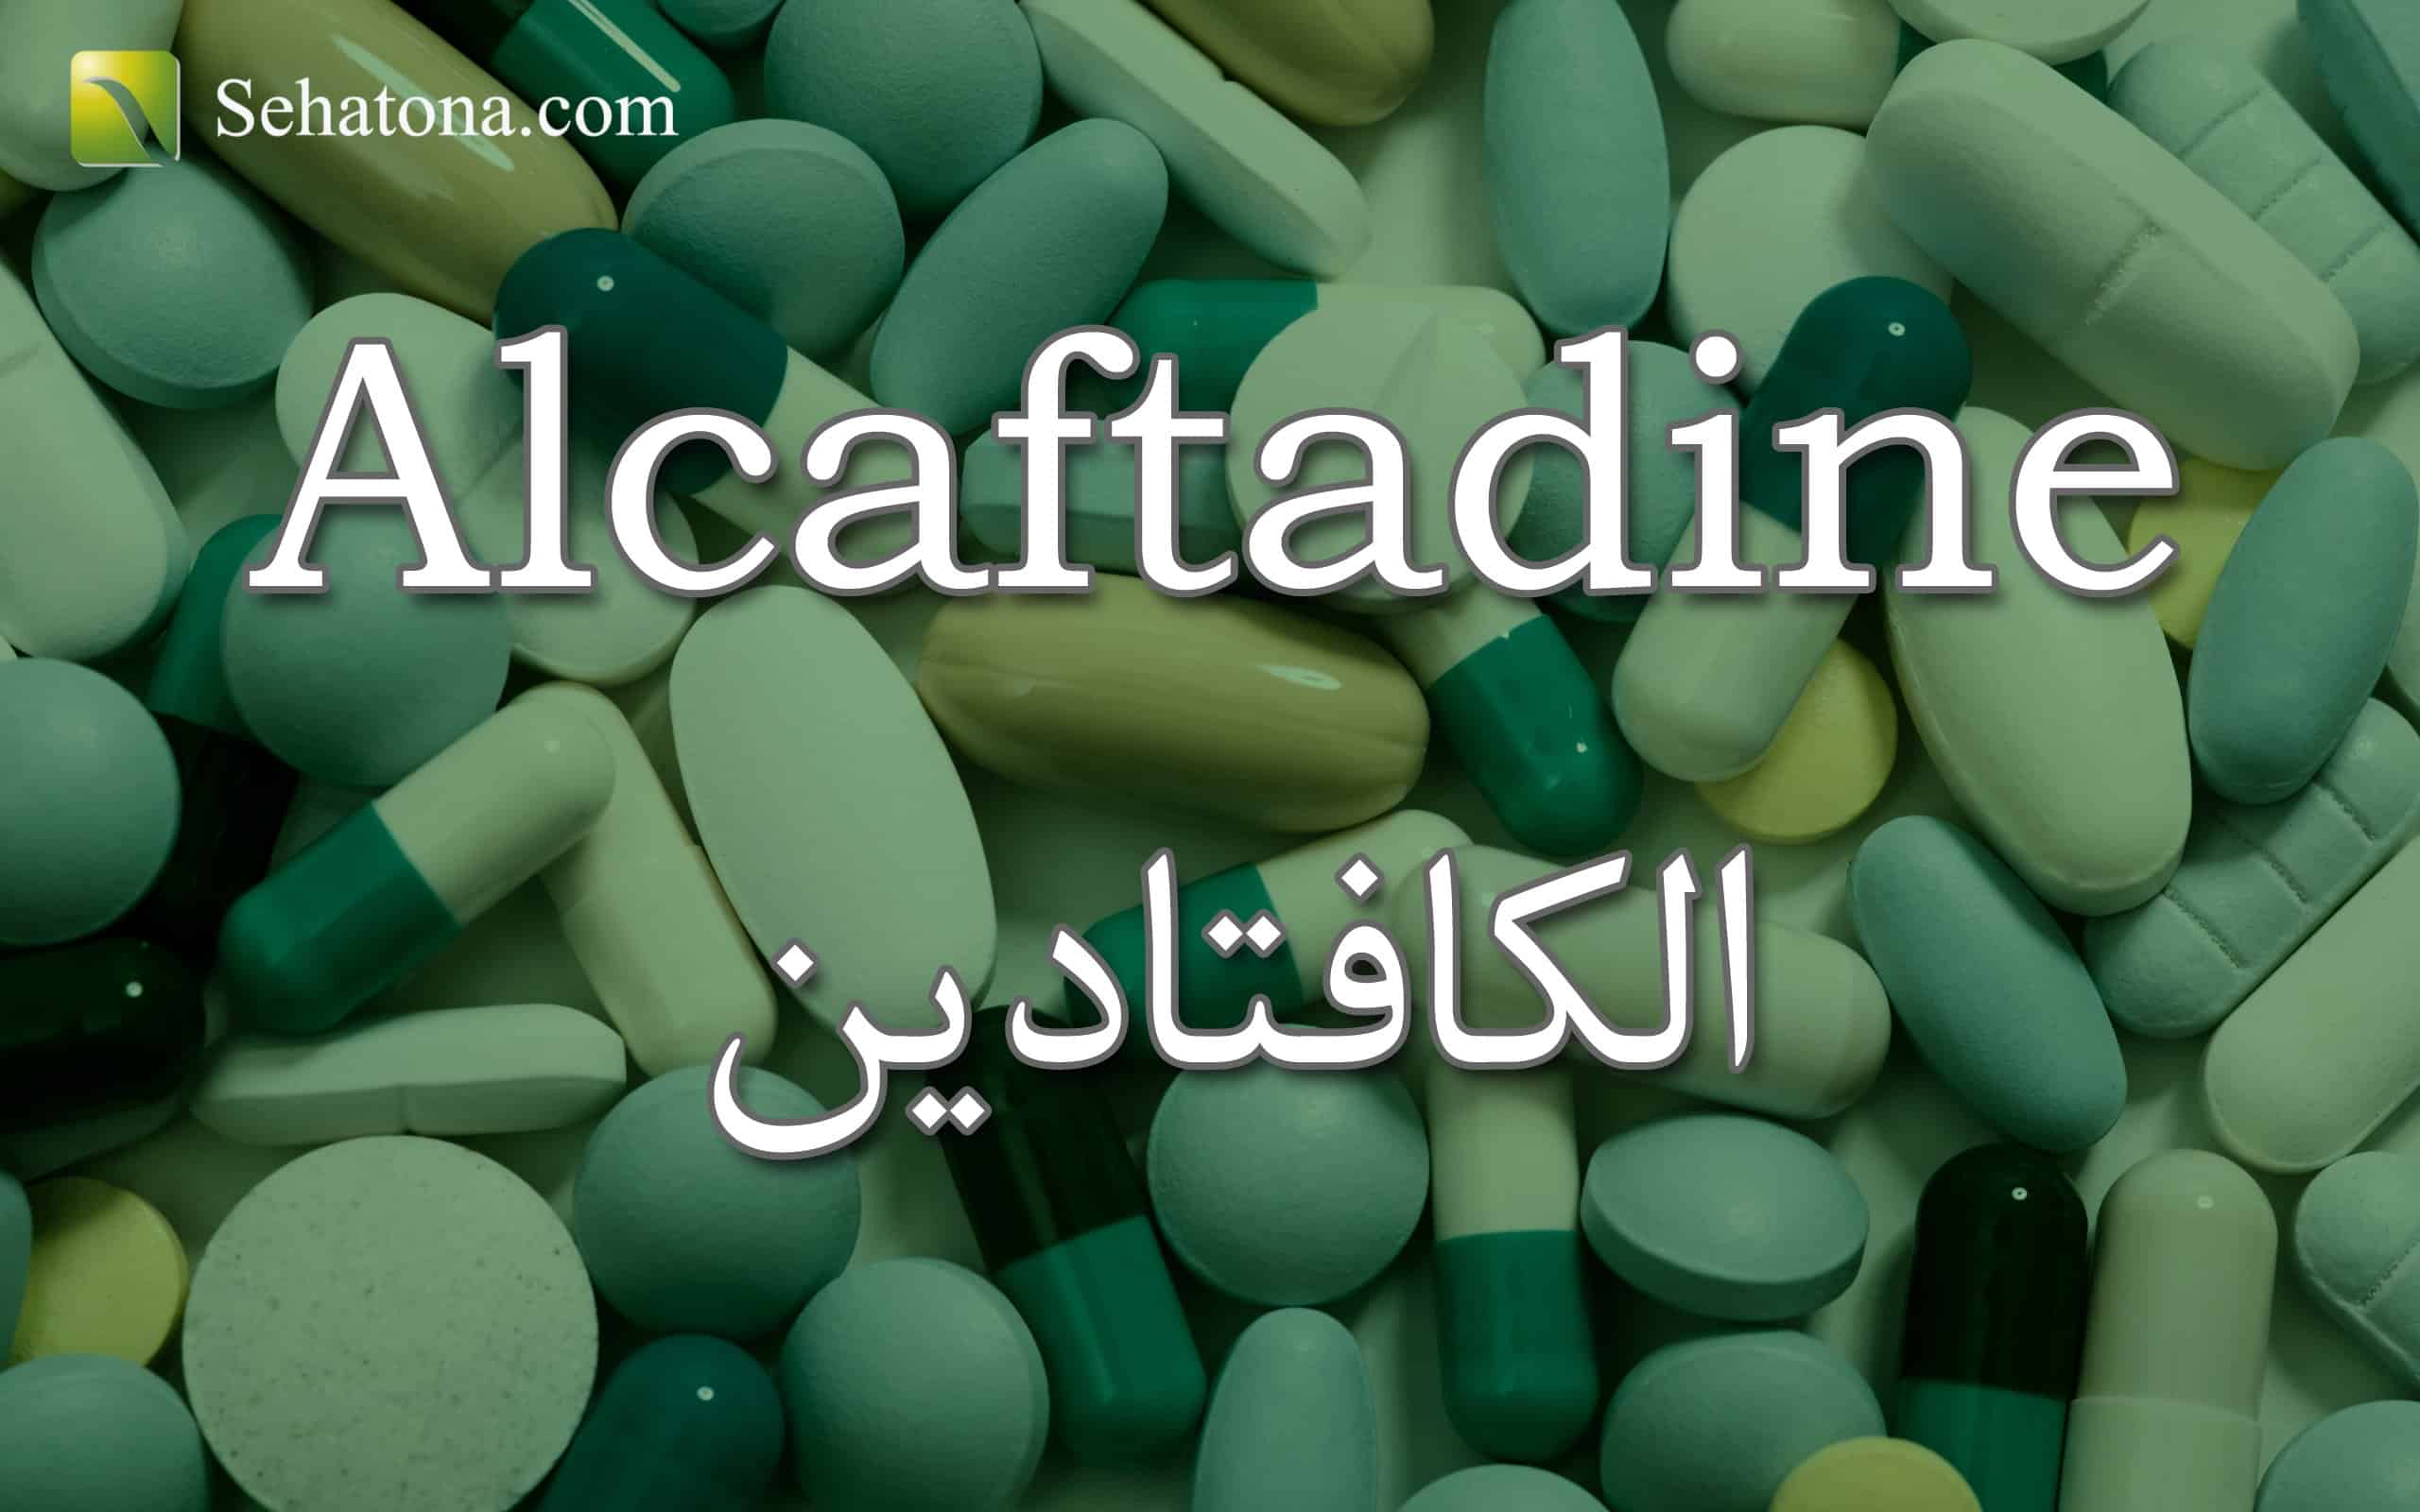 Alcaftadine